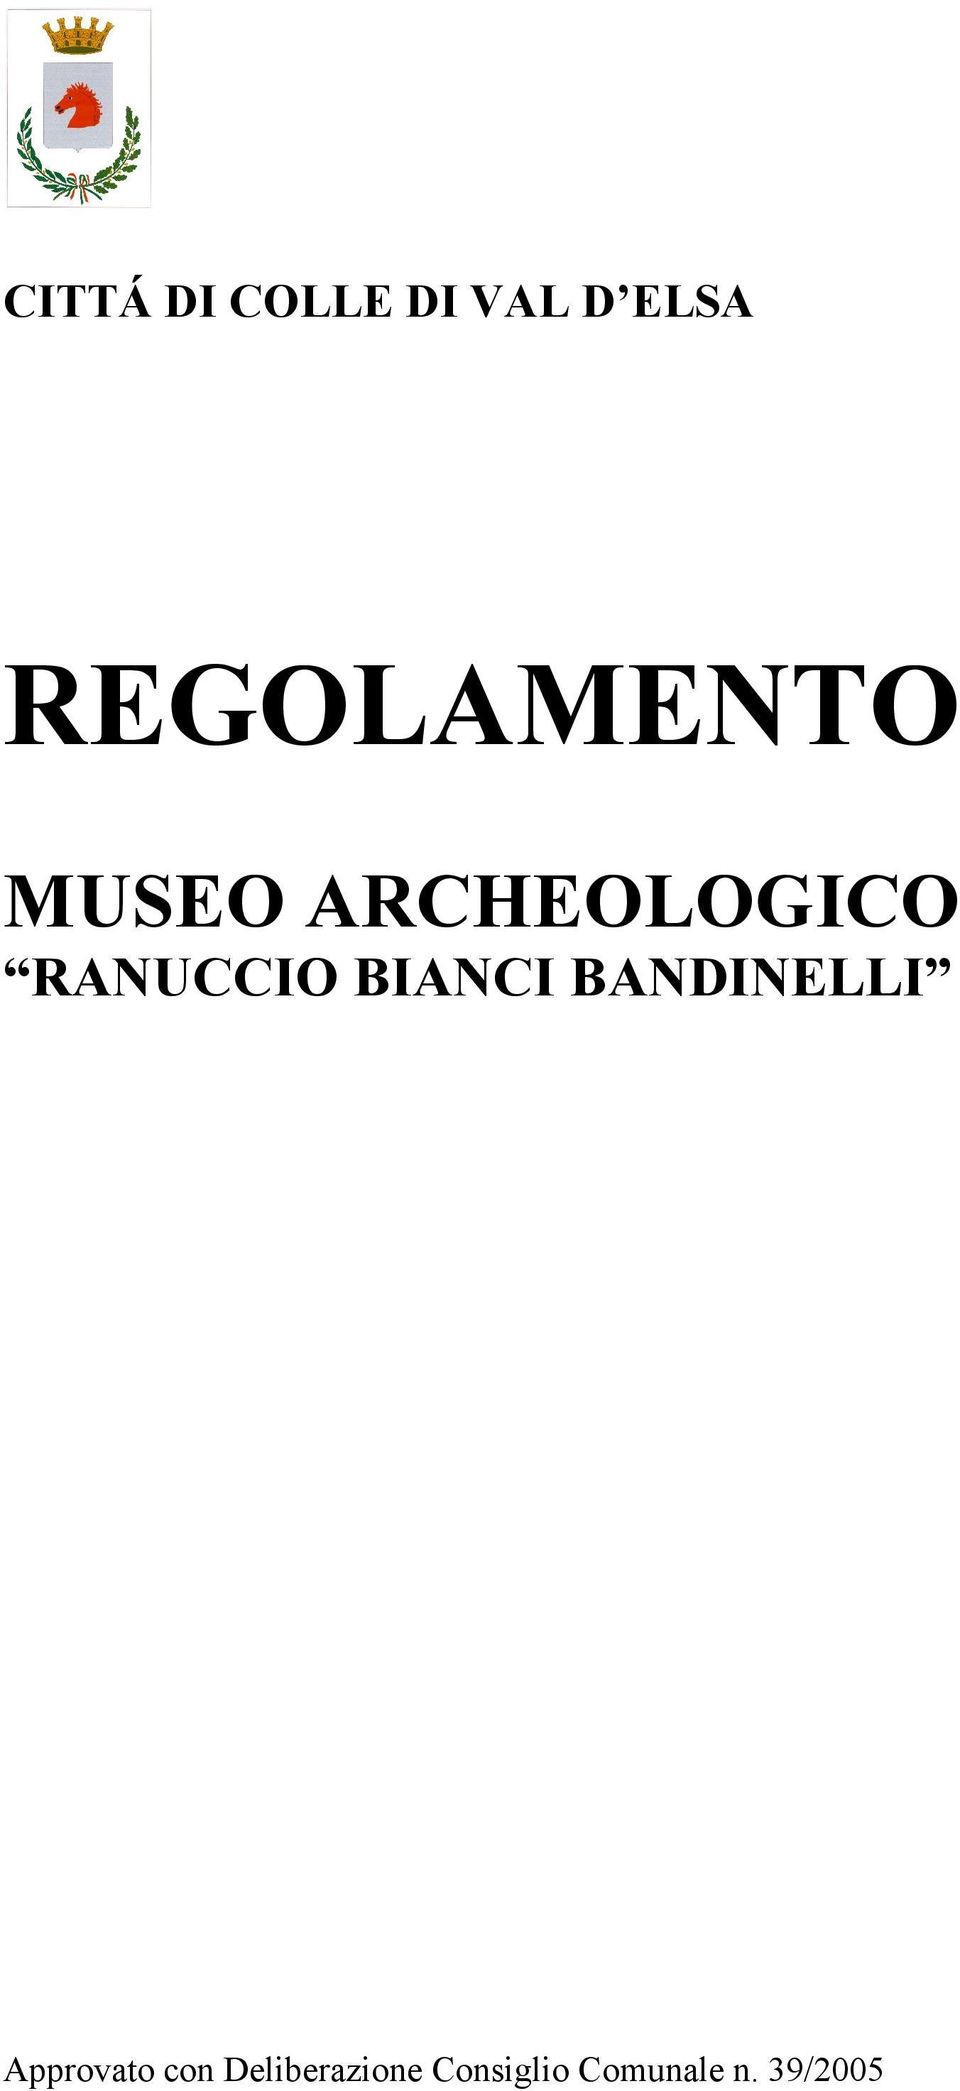 RANUCCIO BIANCI BANDINELLI